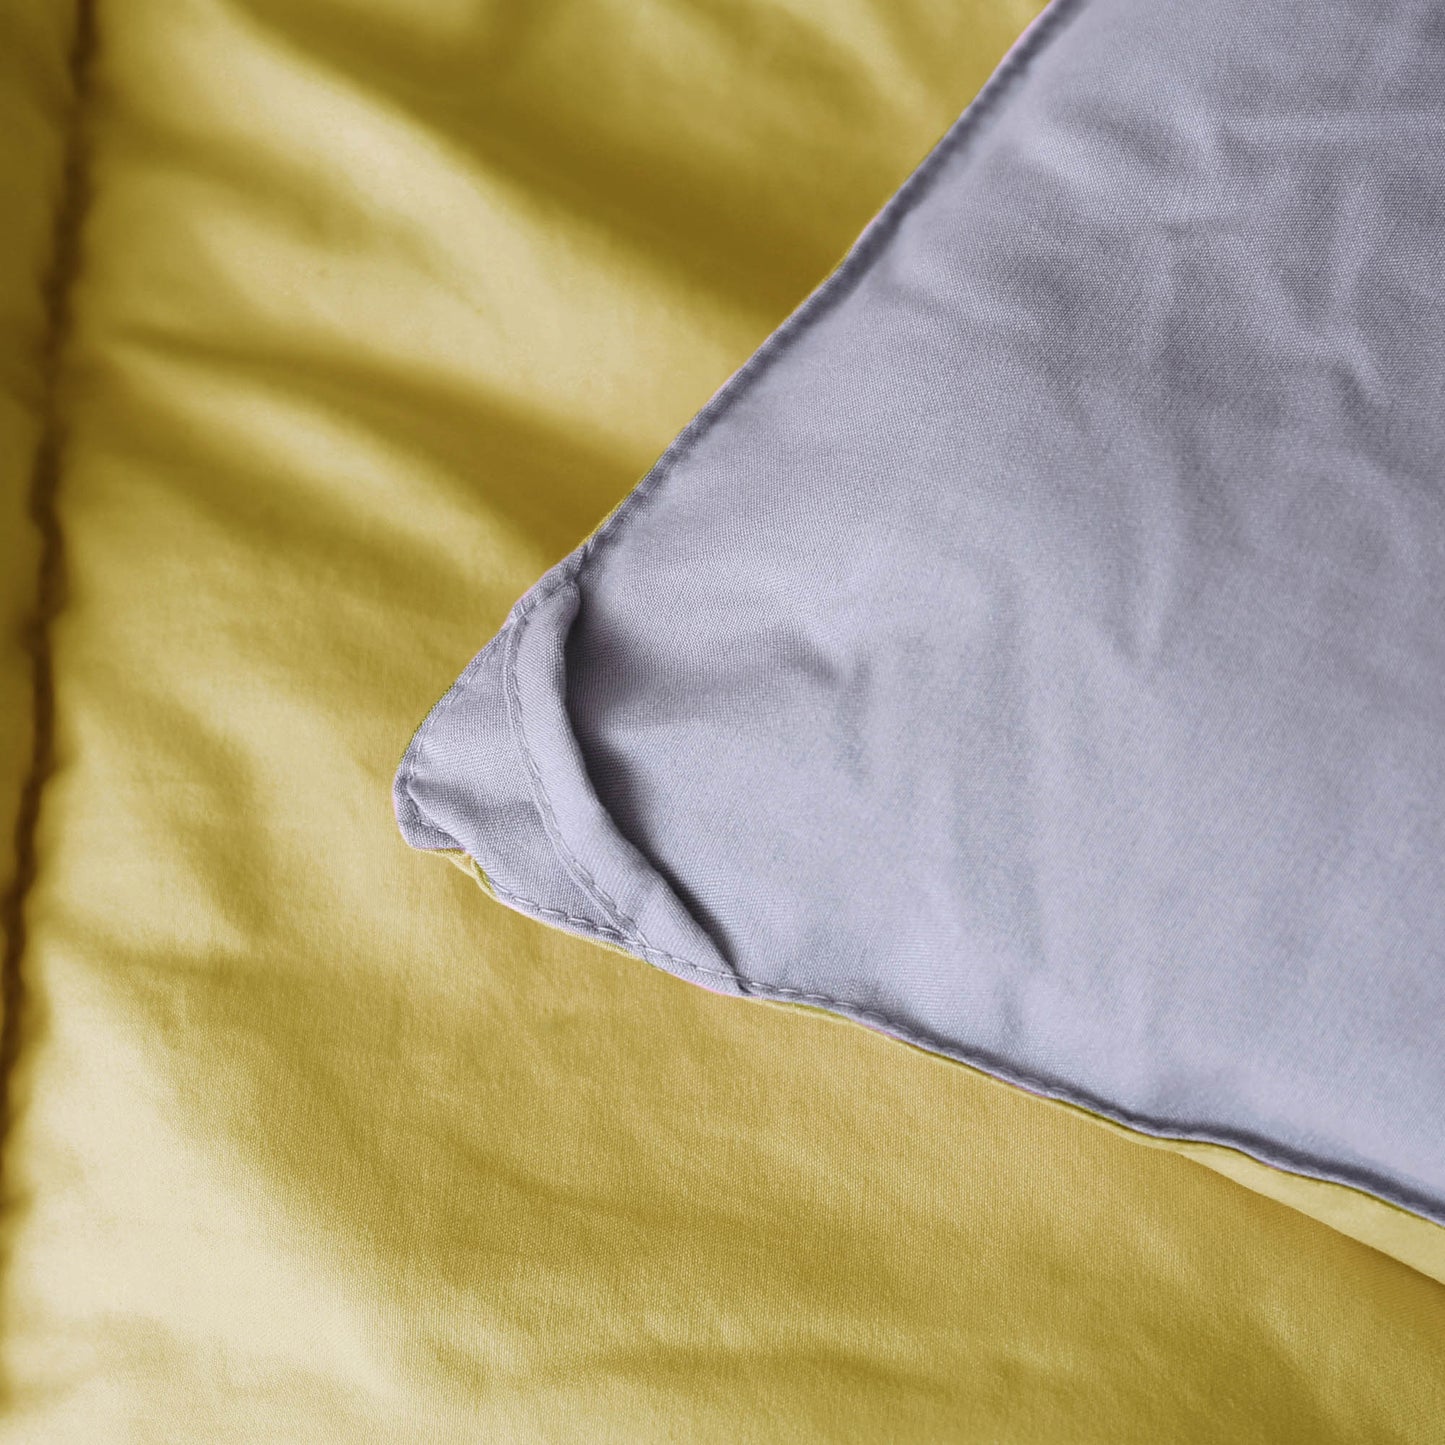 Reversible Soft Comforter Bedding Set